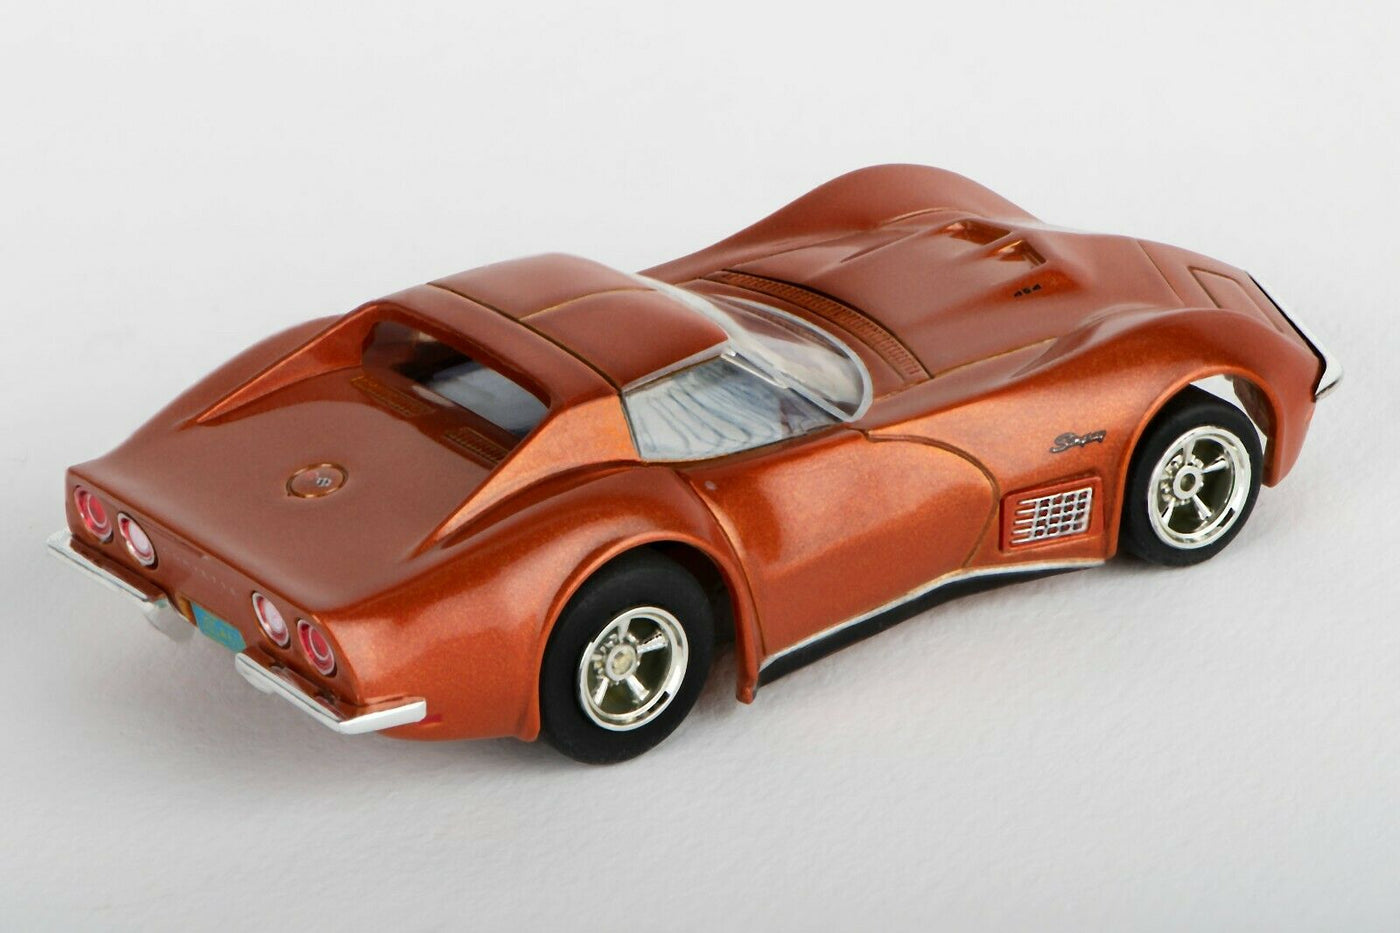 AFX HO Mega G+ 1971 Corvette 454 Ontario Orange Metallic Slot Race Car AFX22047